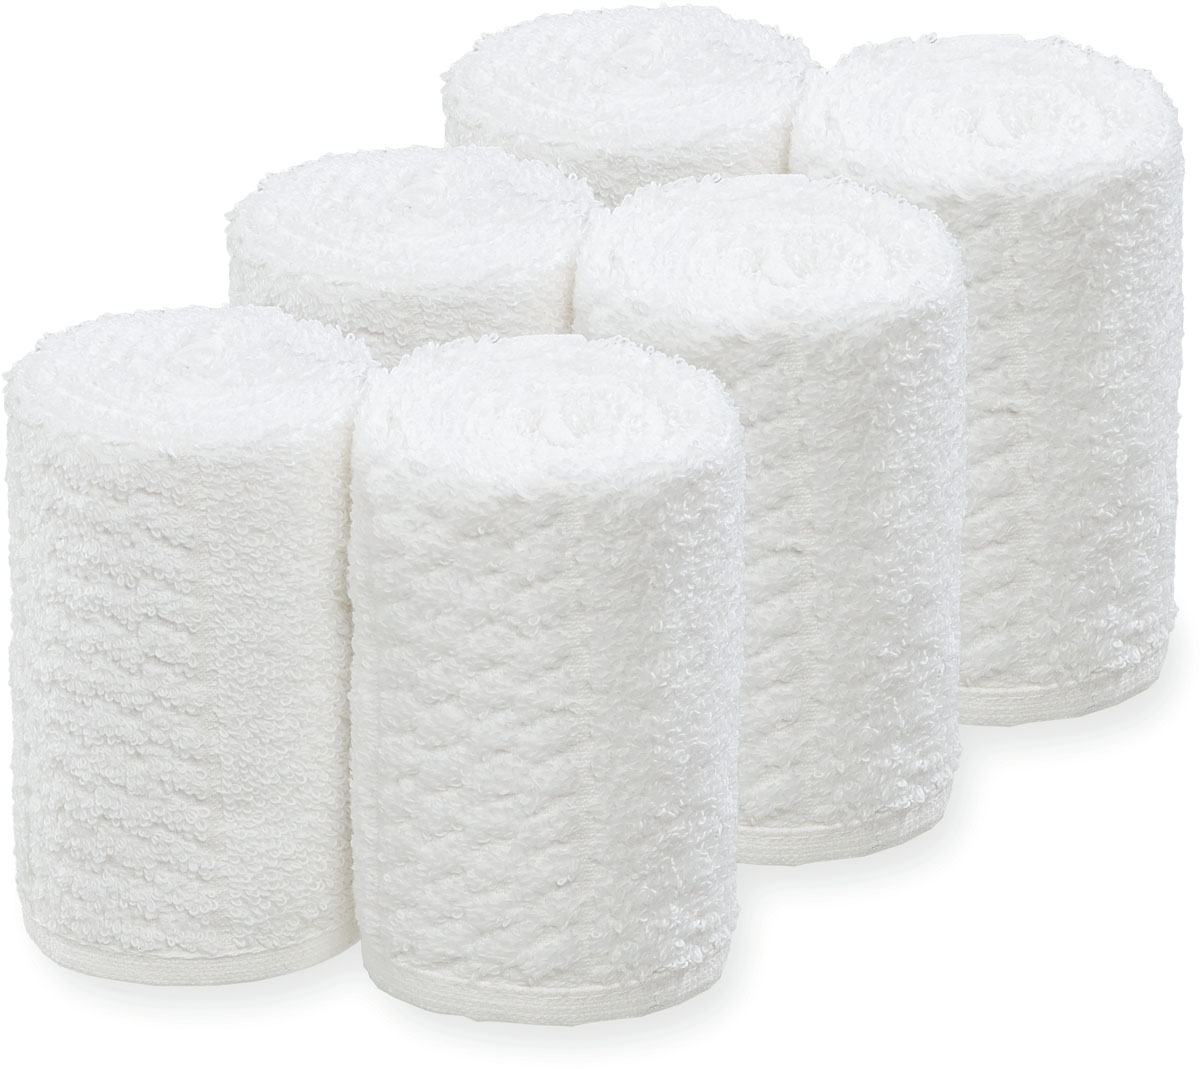  Barburys Take Care Facial Towels 6 pieces white 